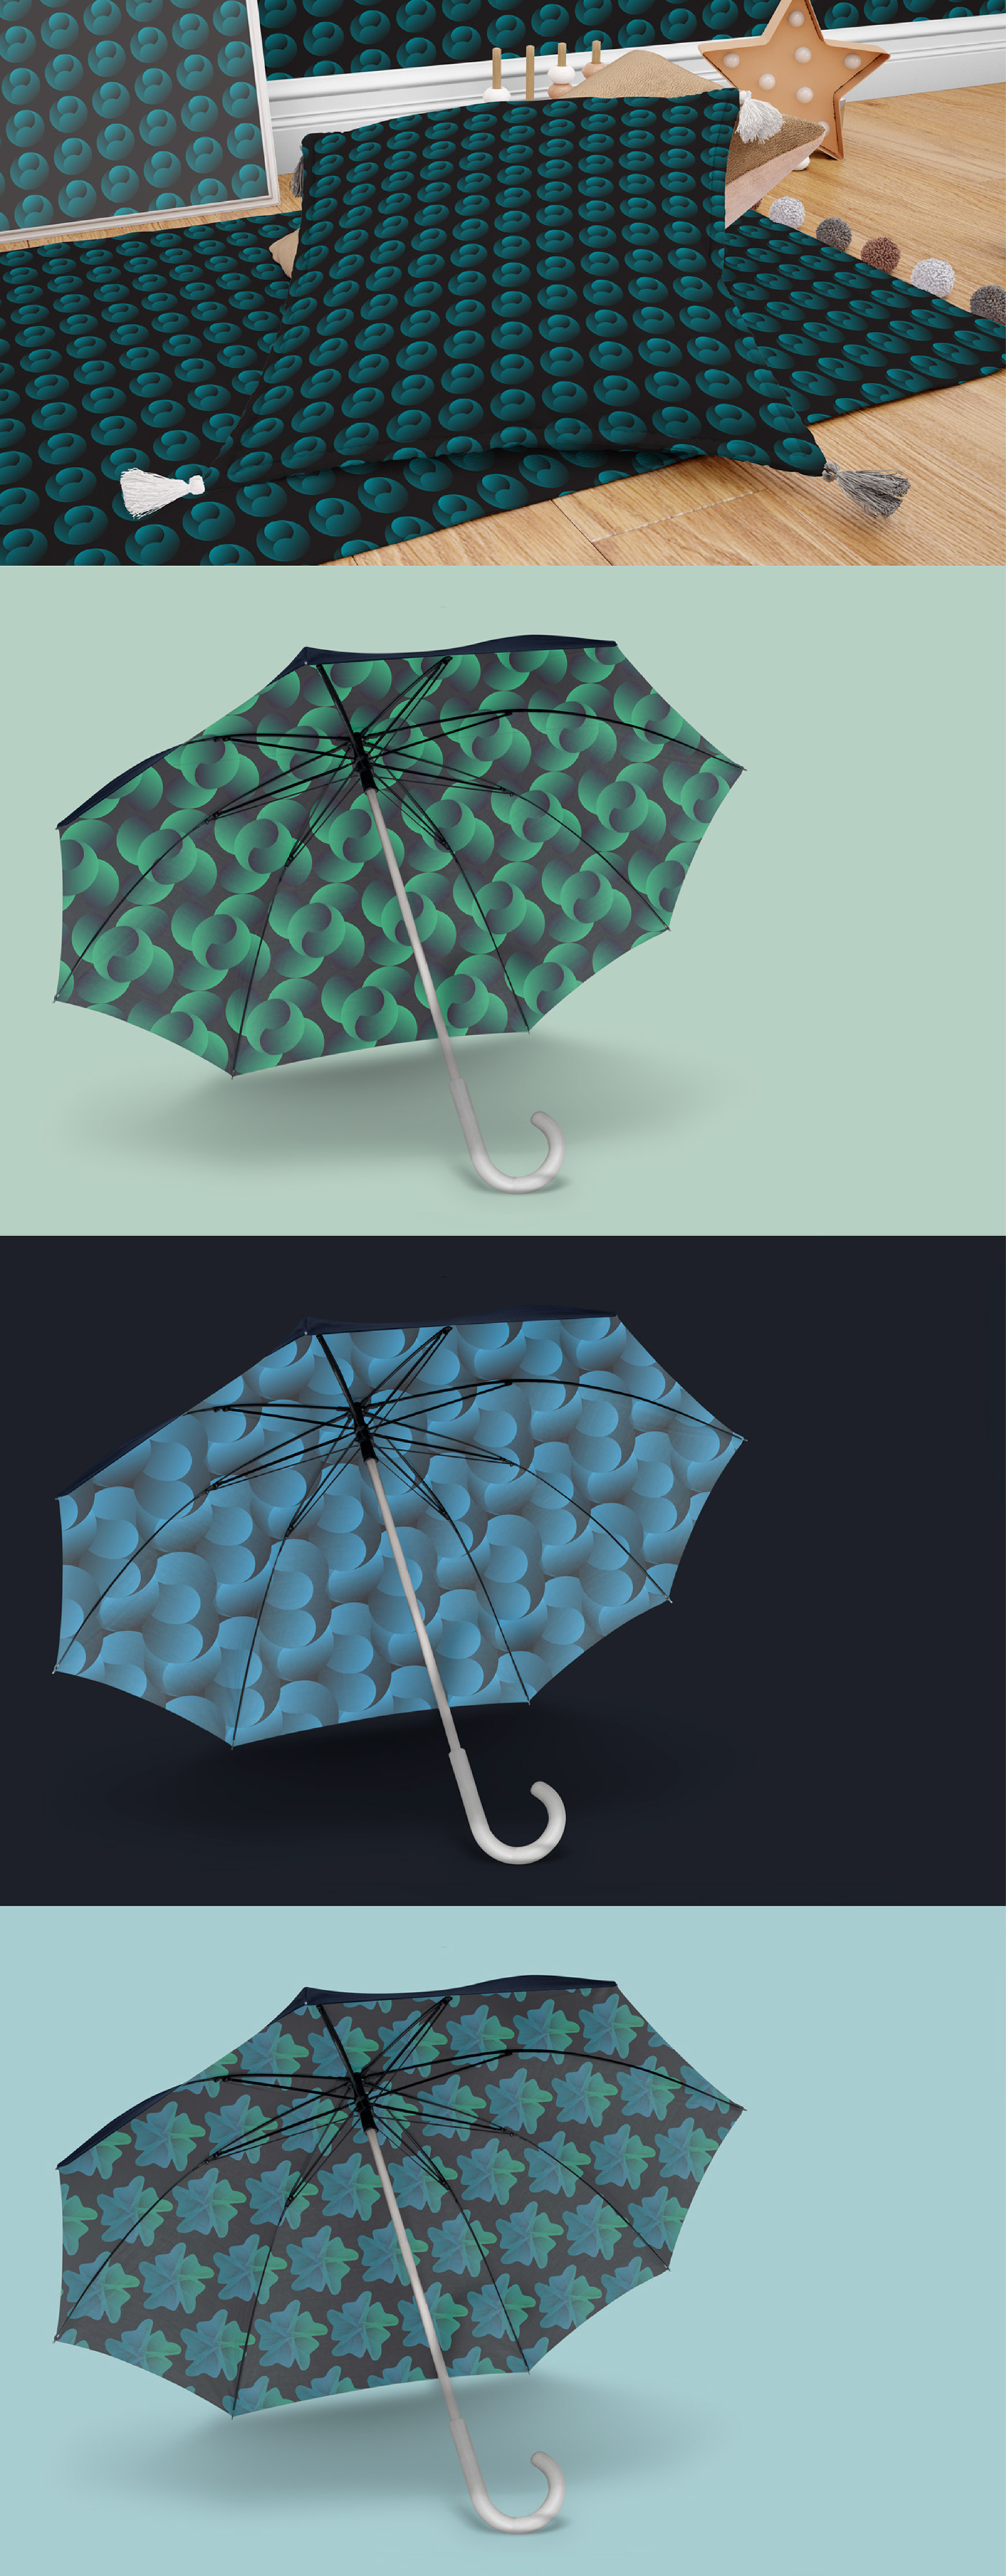 Umbrella patterndesign wallpaperdesign background wallpaper pattern abstract printdesigner surfacepatterndesign Textlie